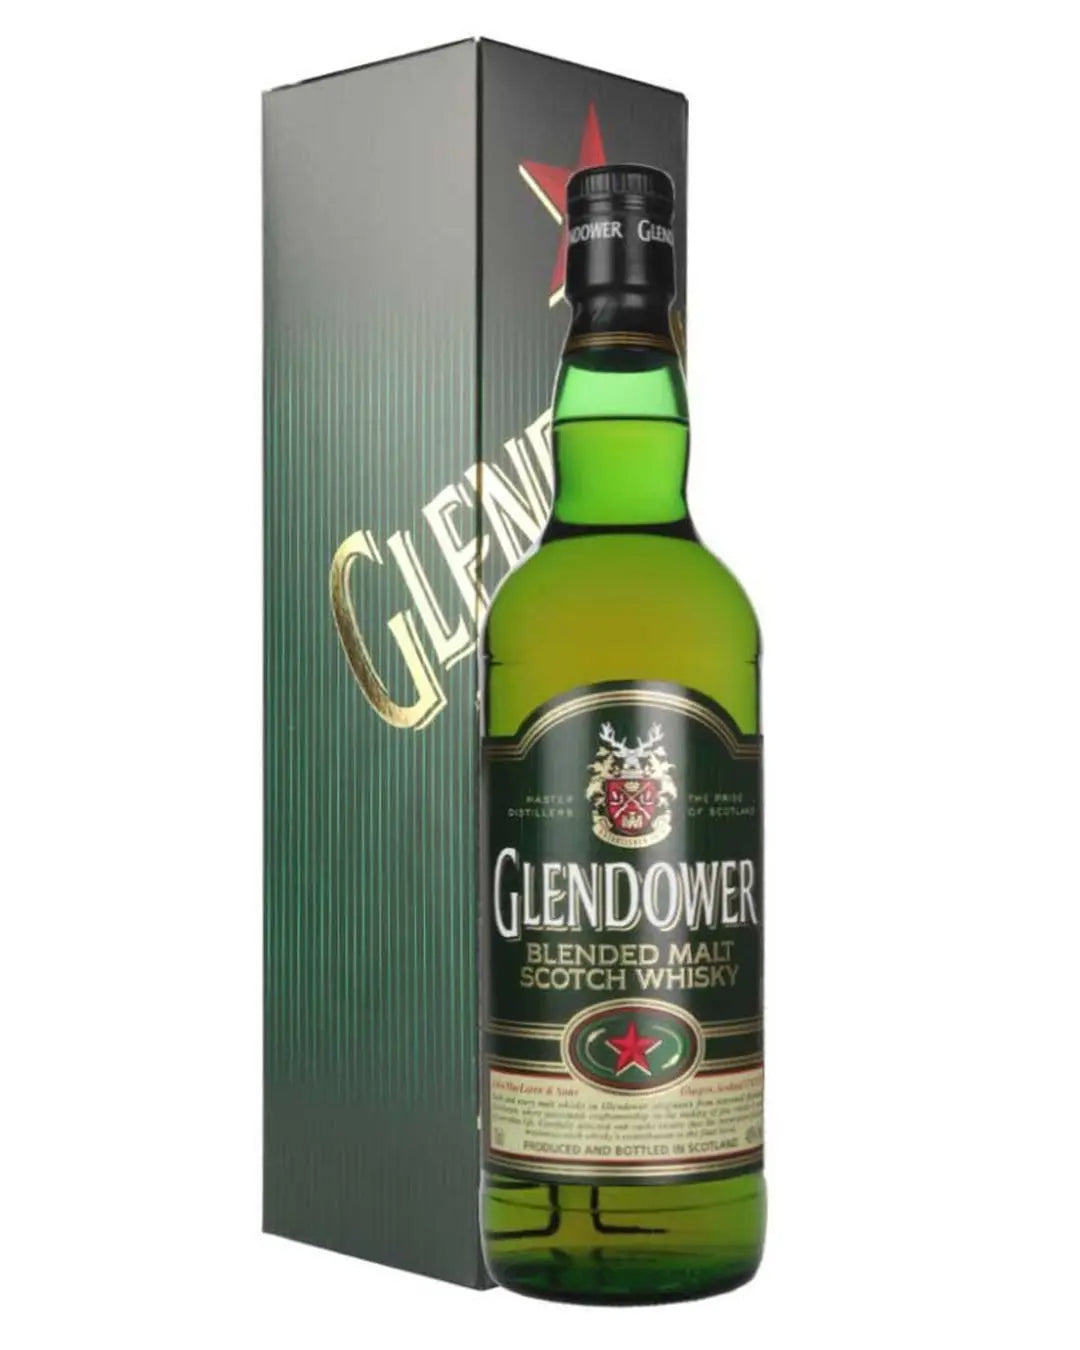 Glendower Blended Malt Scotch Whisky, 70 cl Whisky 5038342511644